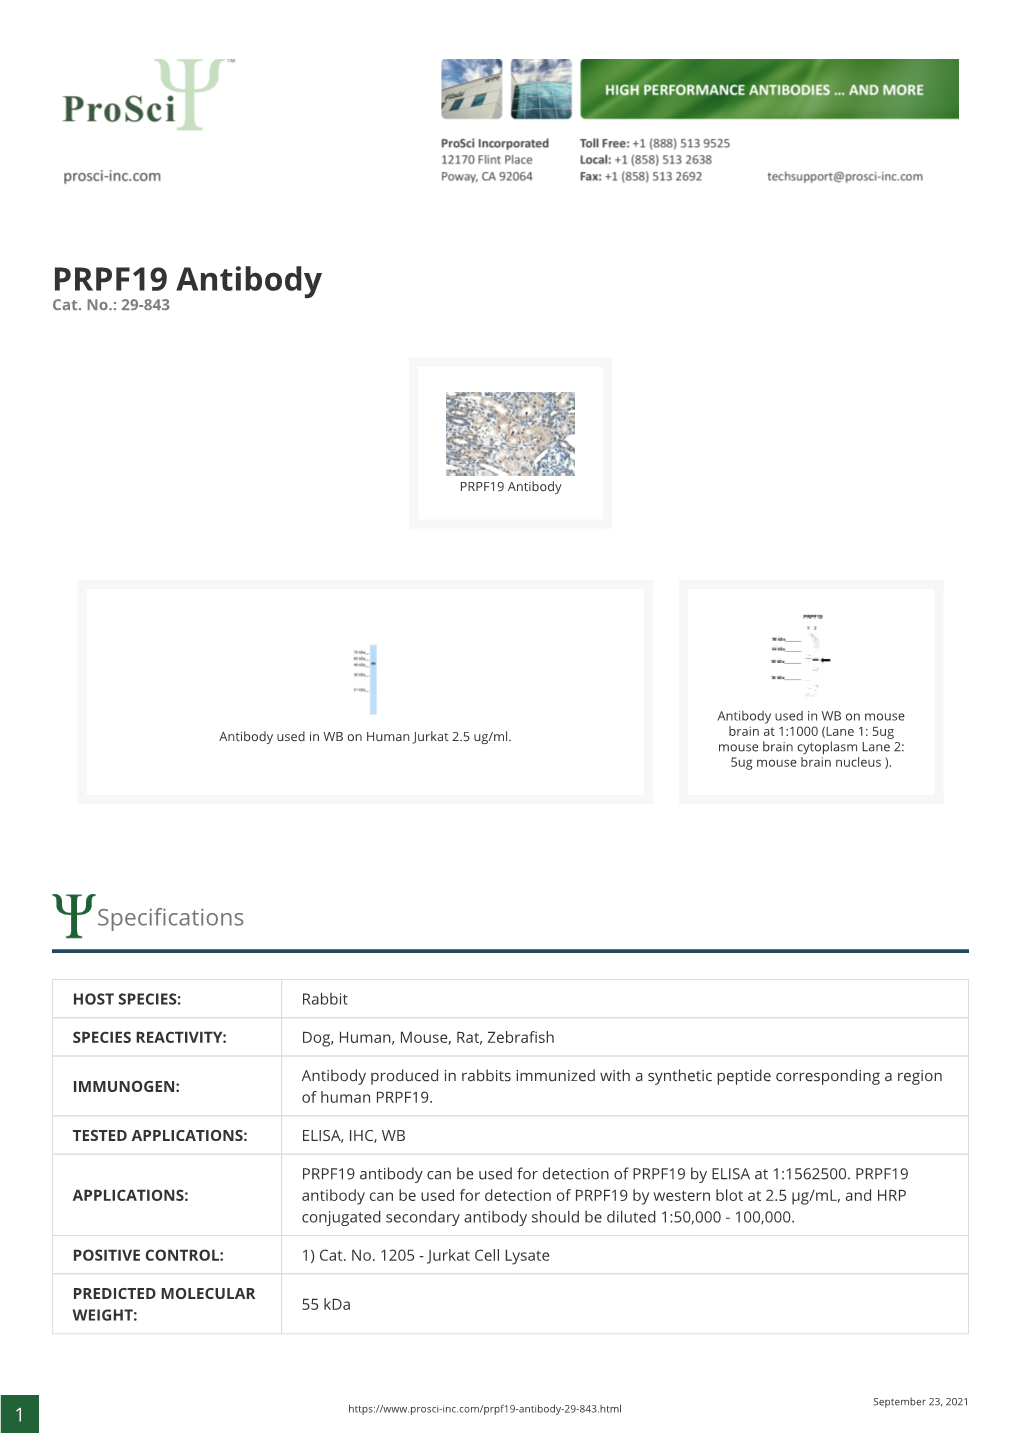 PRPF19 Antibody Cat